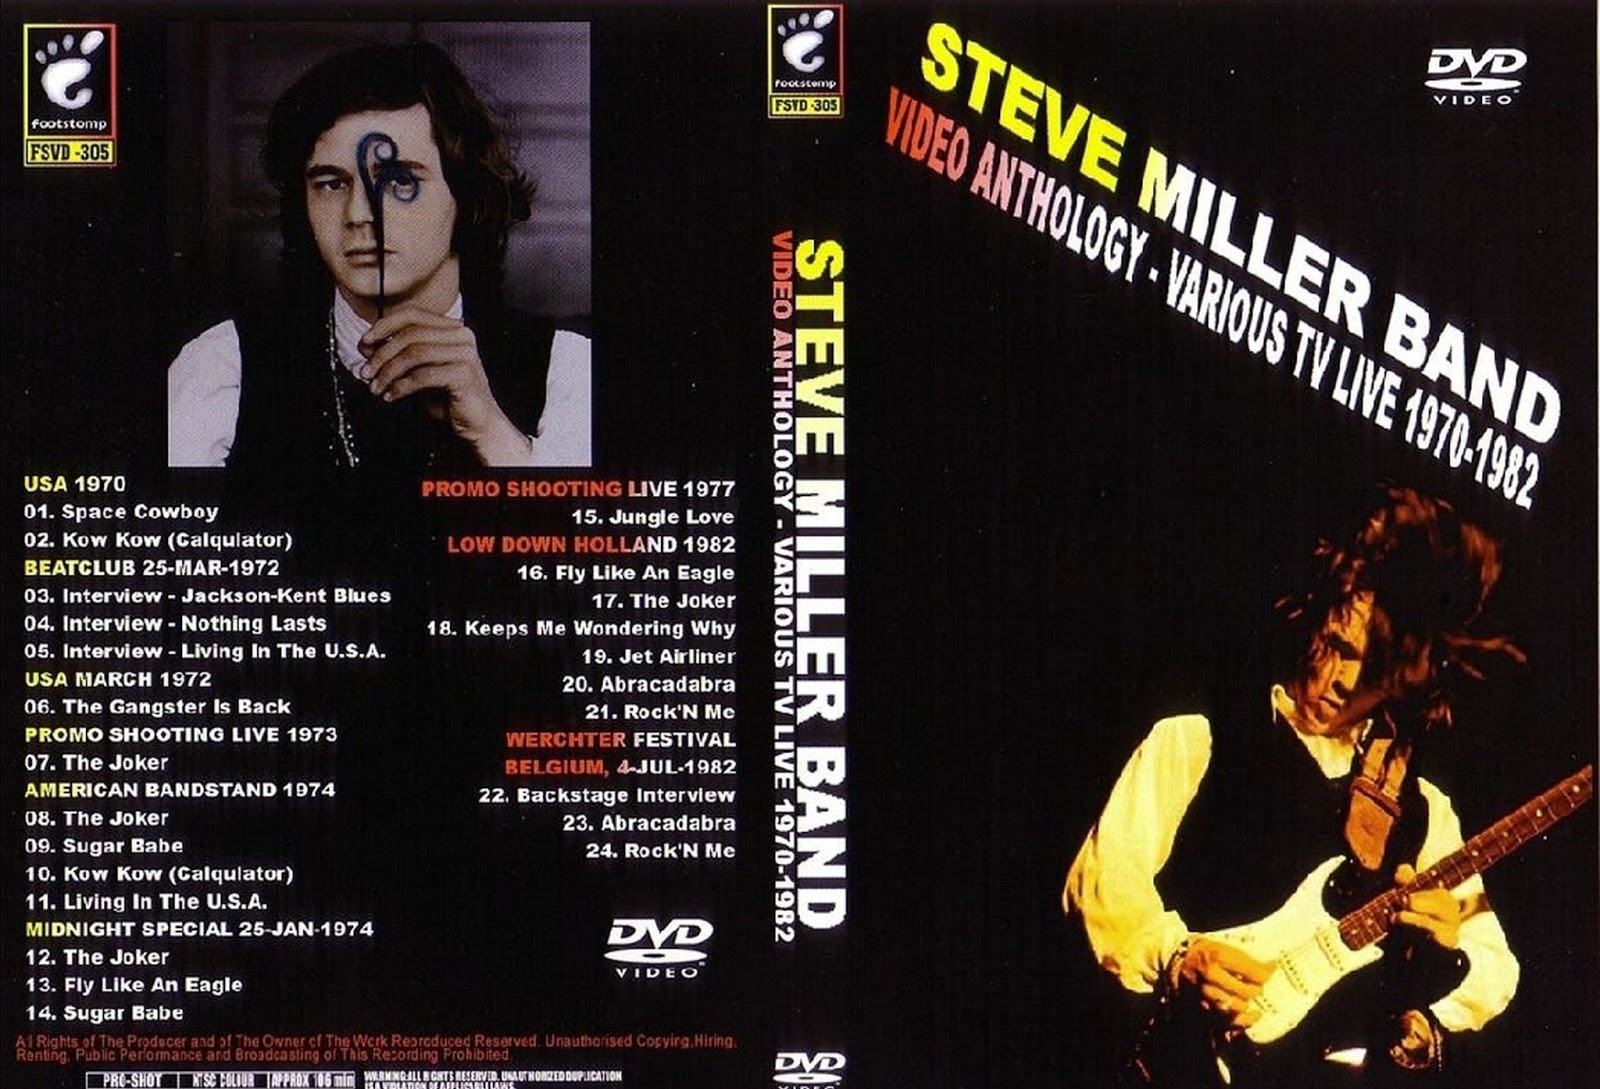 Peter C's Music TV & Video Archives: THE STEVE MILLER BAND on DVD